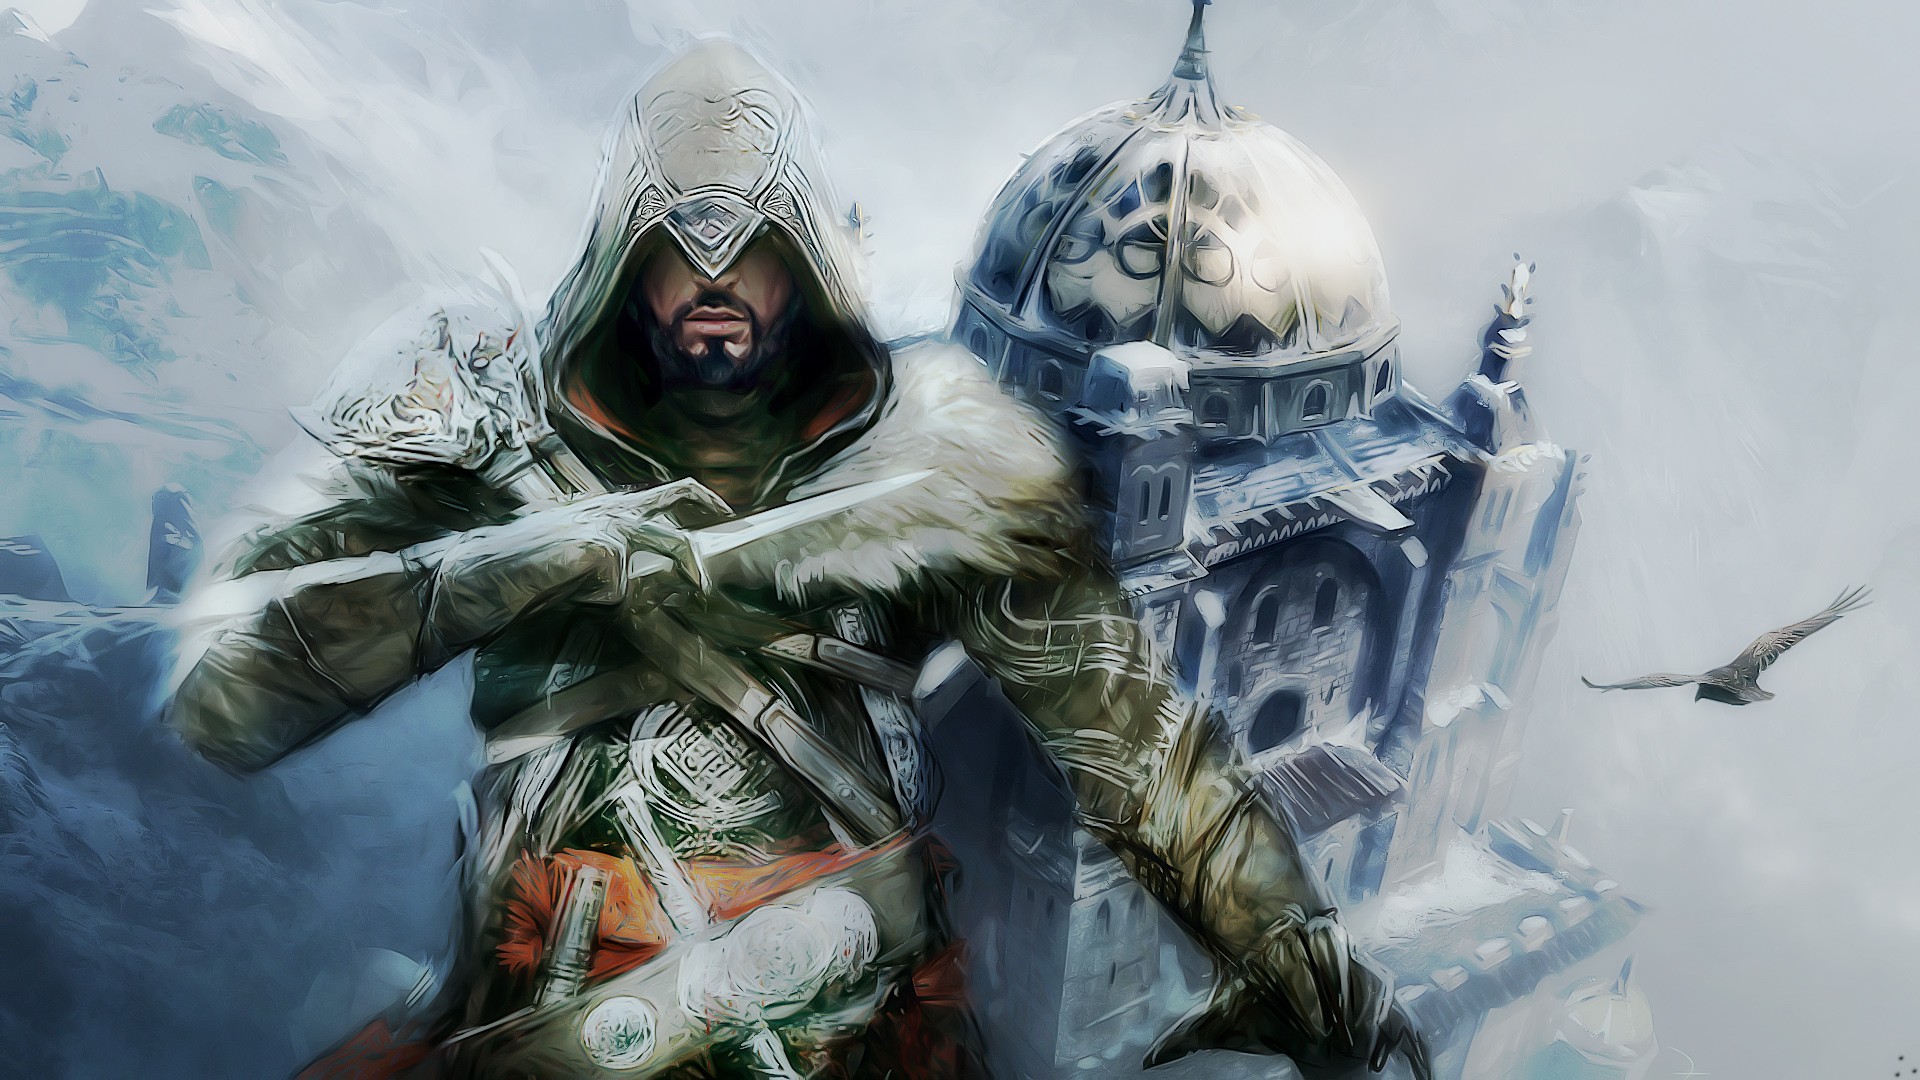 Assassins Creed: Revelations Wallpaper